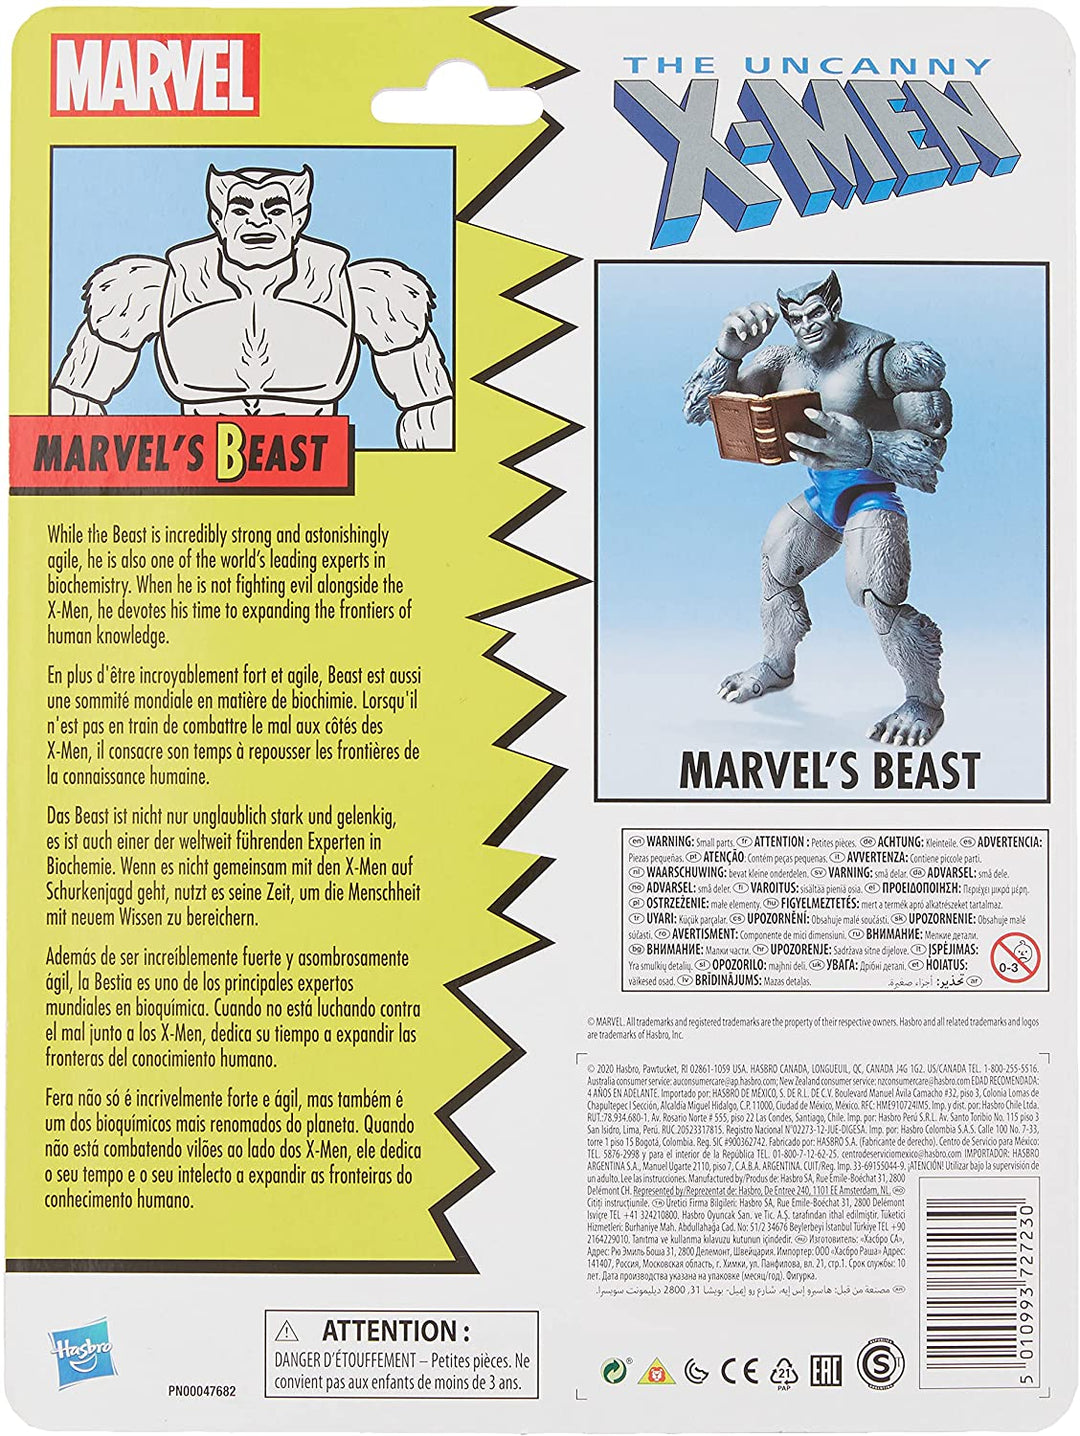 Hasbro Marvel Legends Series 15 cm große Marvel's Beast Actionfigur zum Sammeln, Vintage-Kollektion